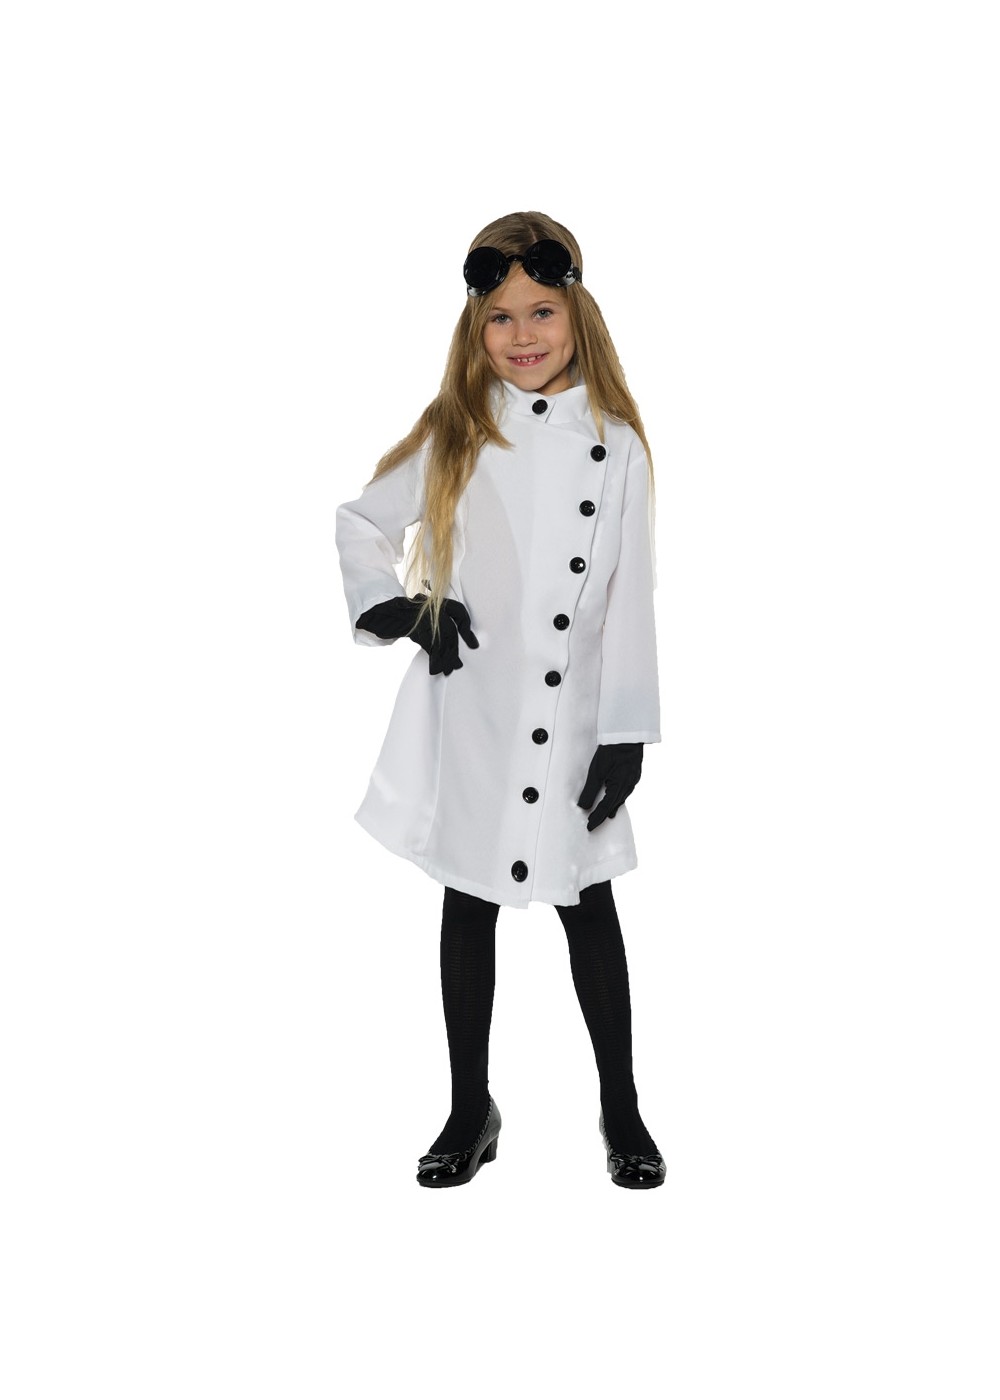 Kids Mad Science Girl Costume